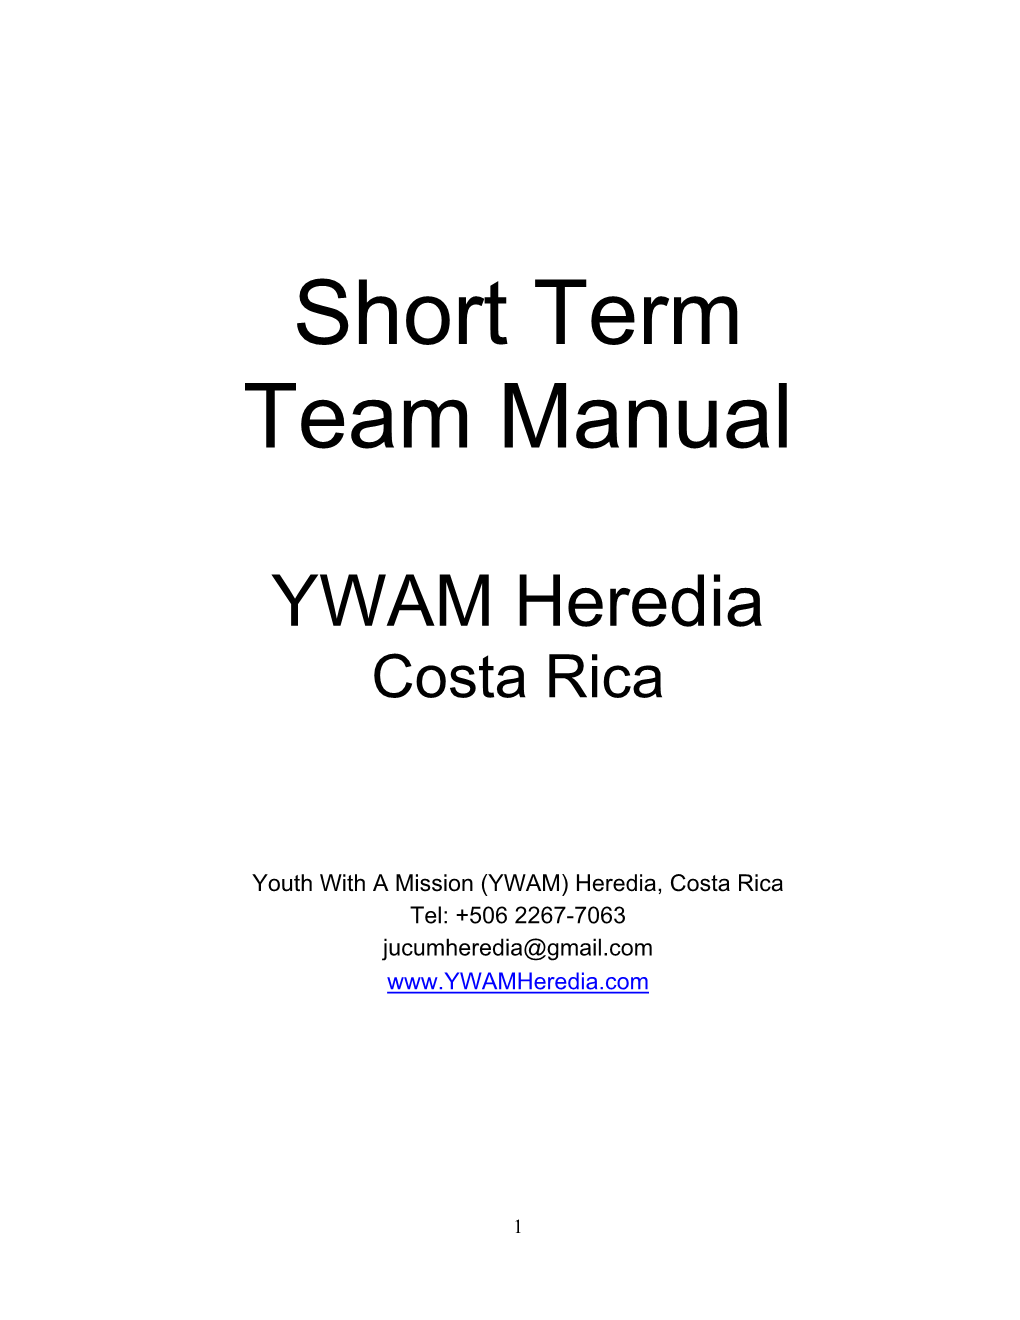 Short Term Team Manual